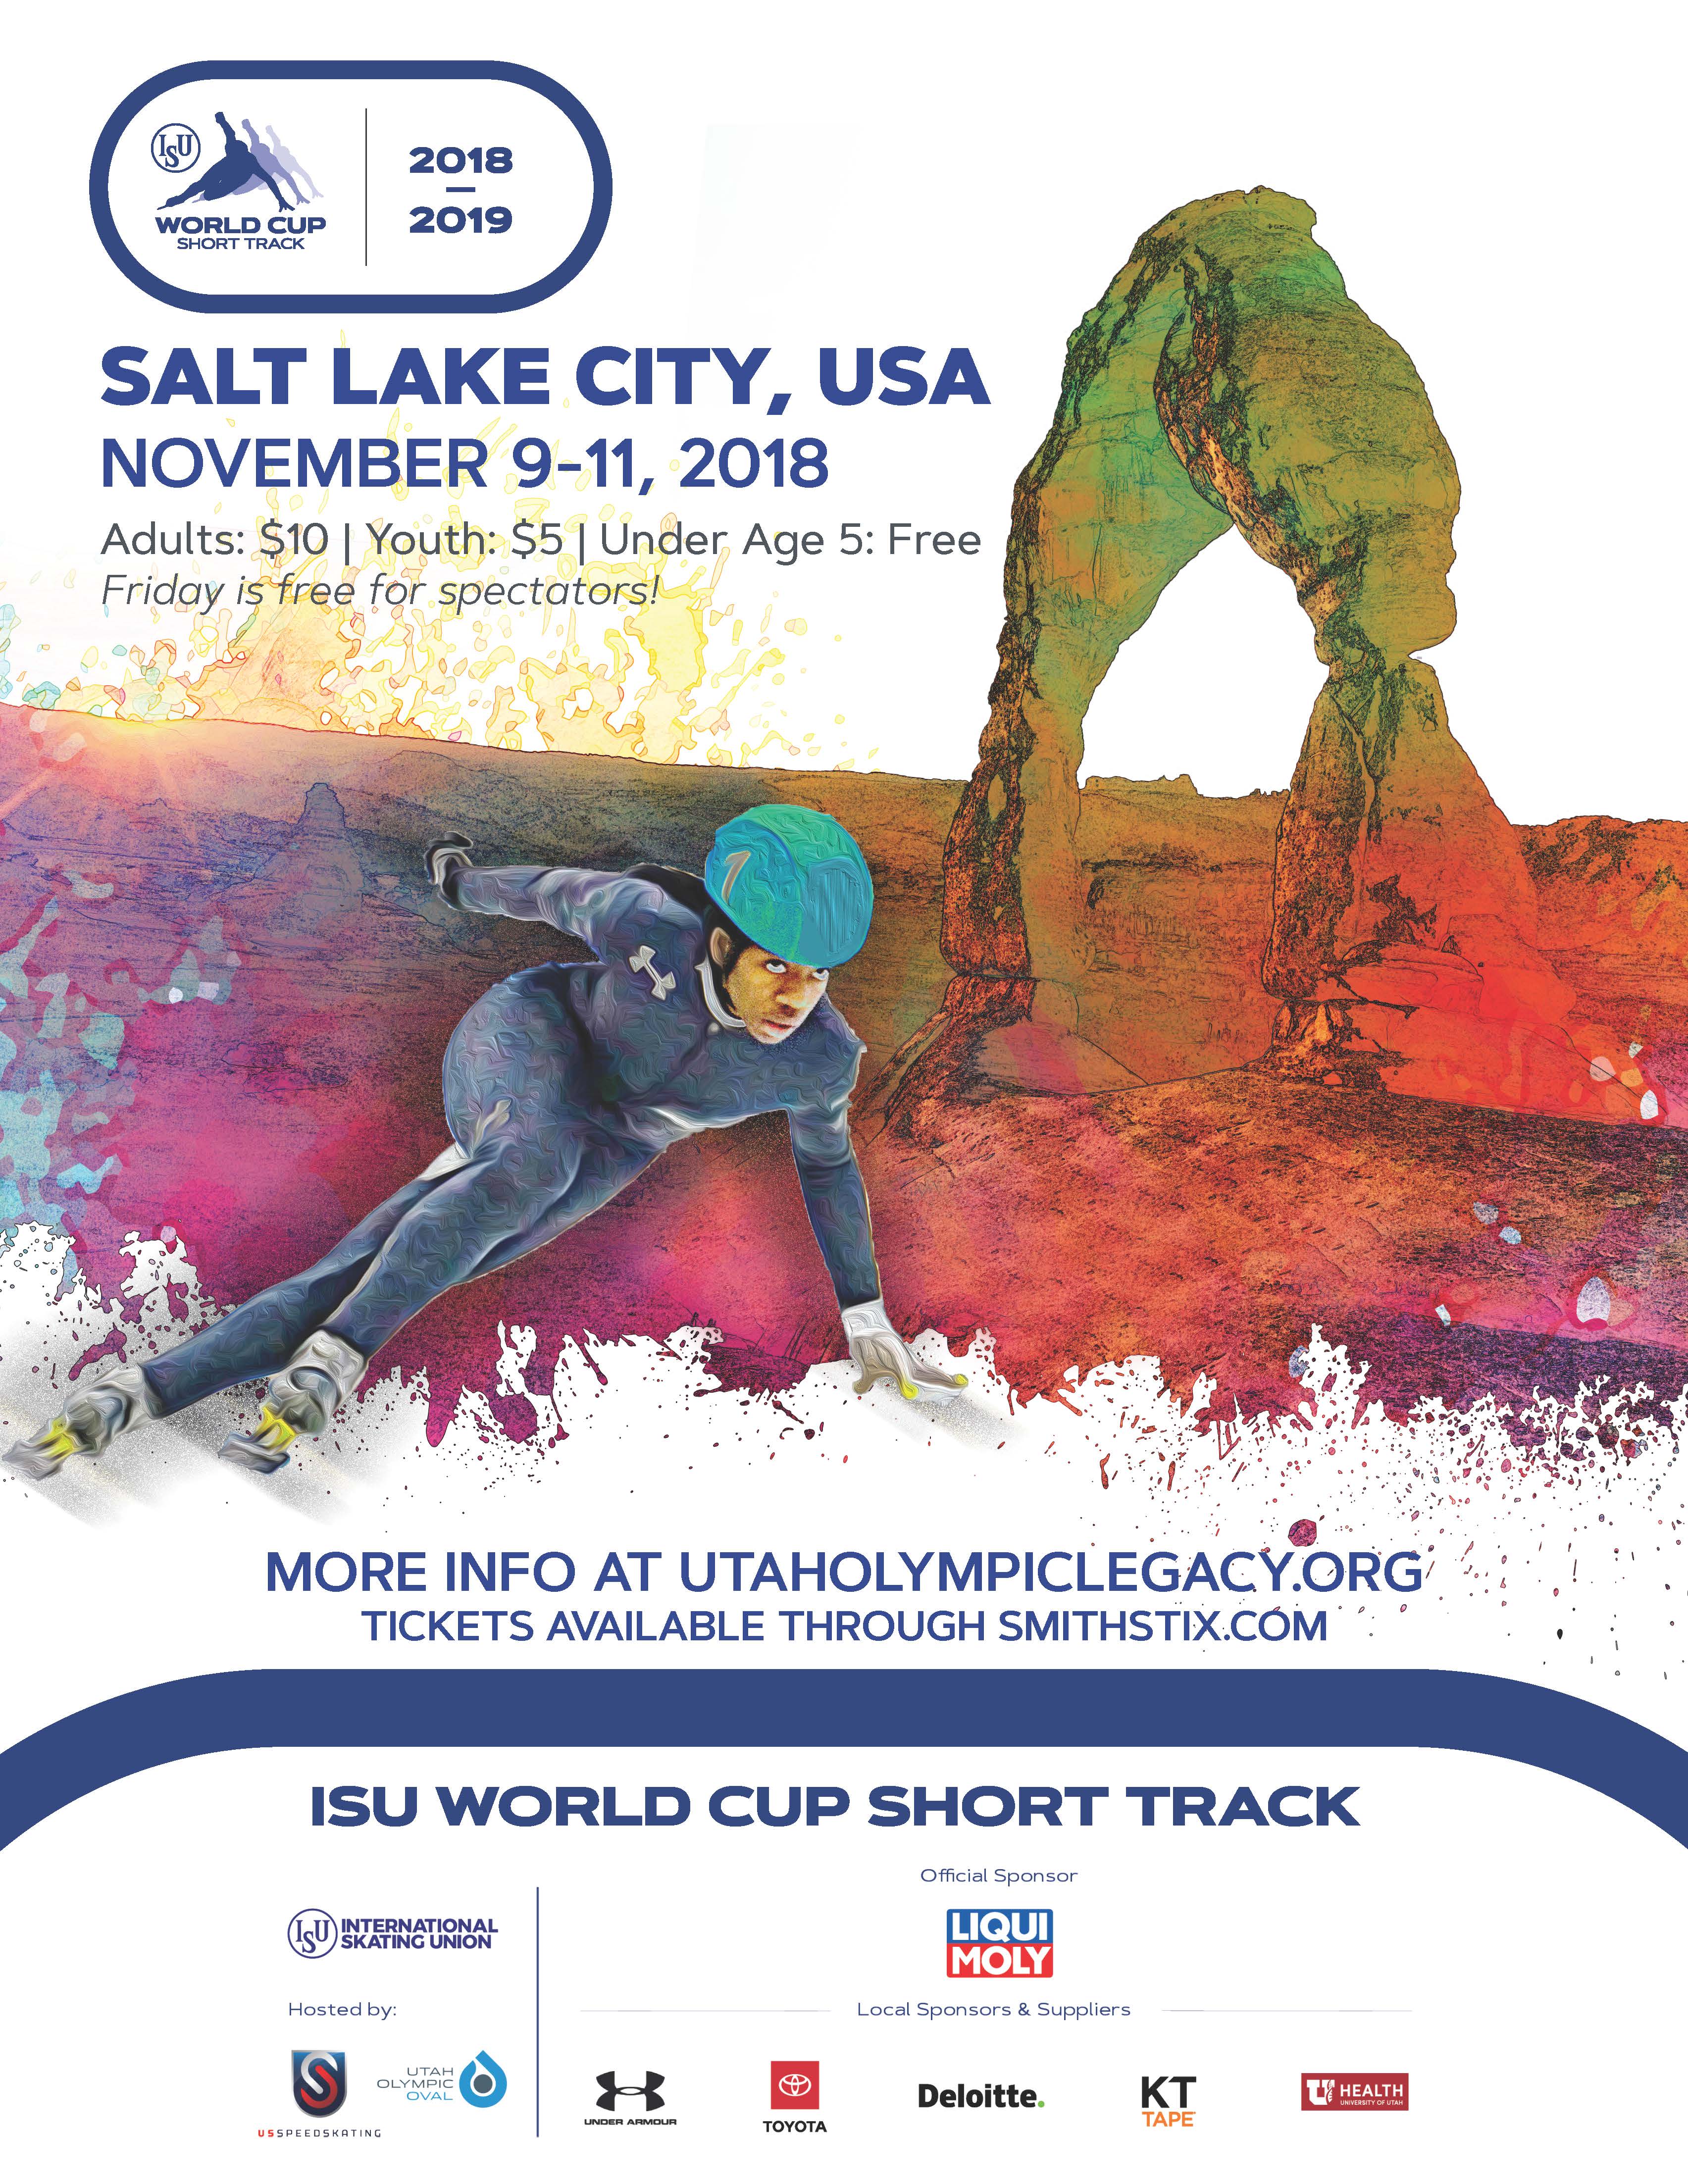 ISU Short Track World Cup